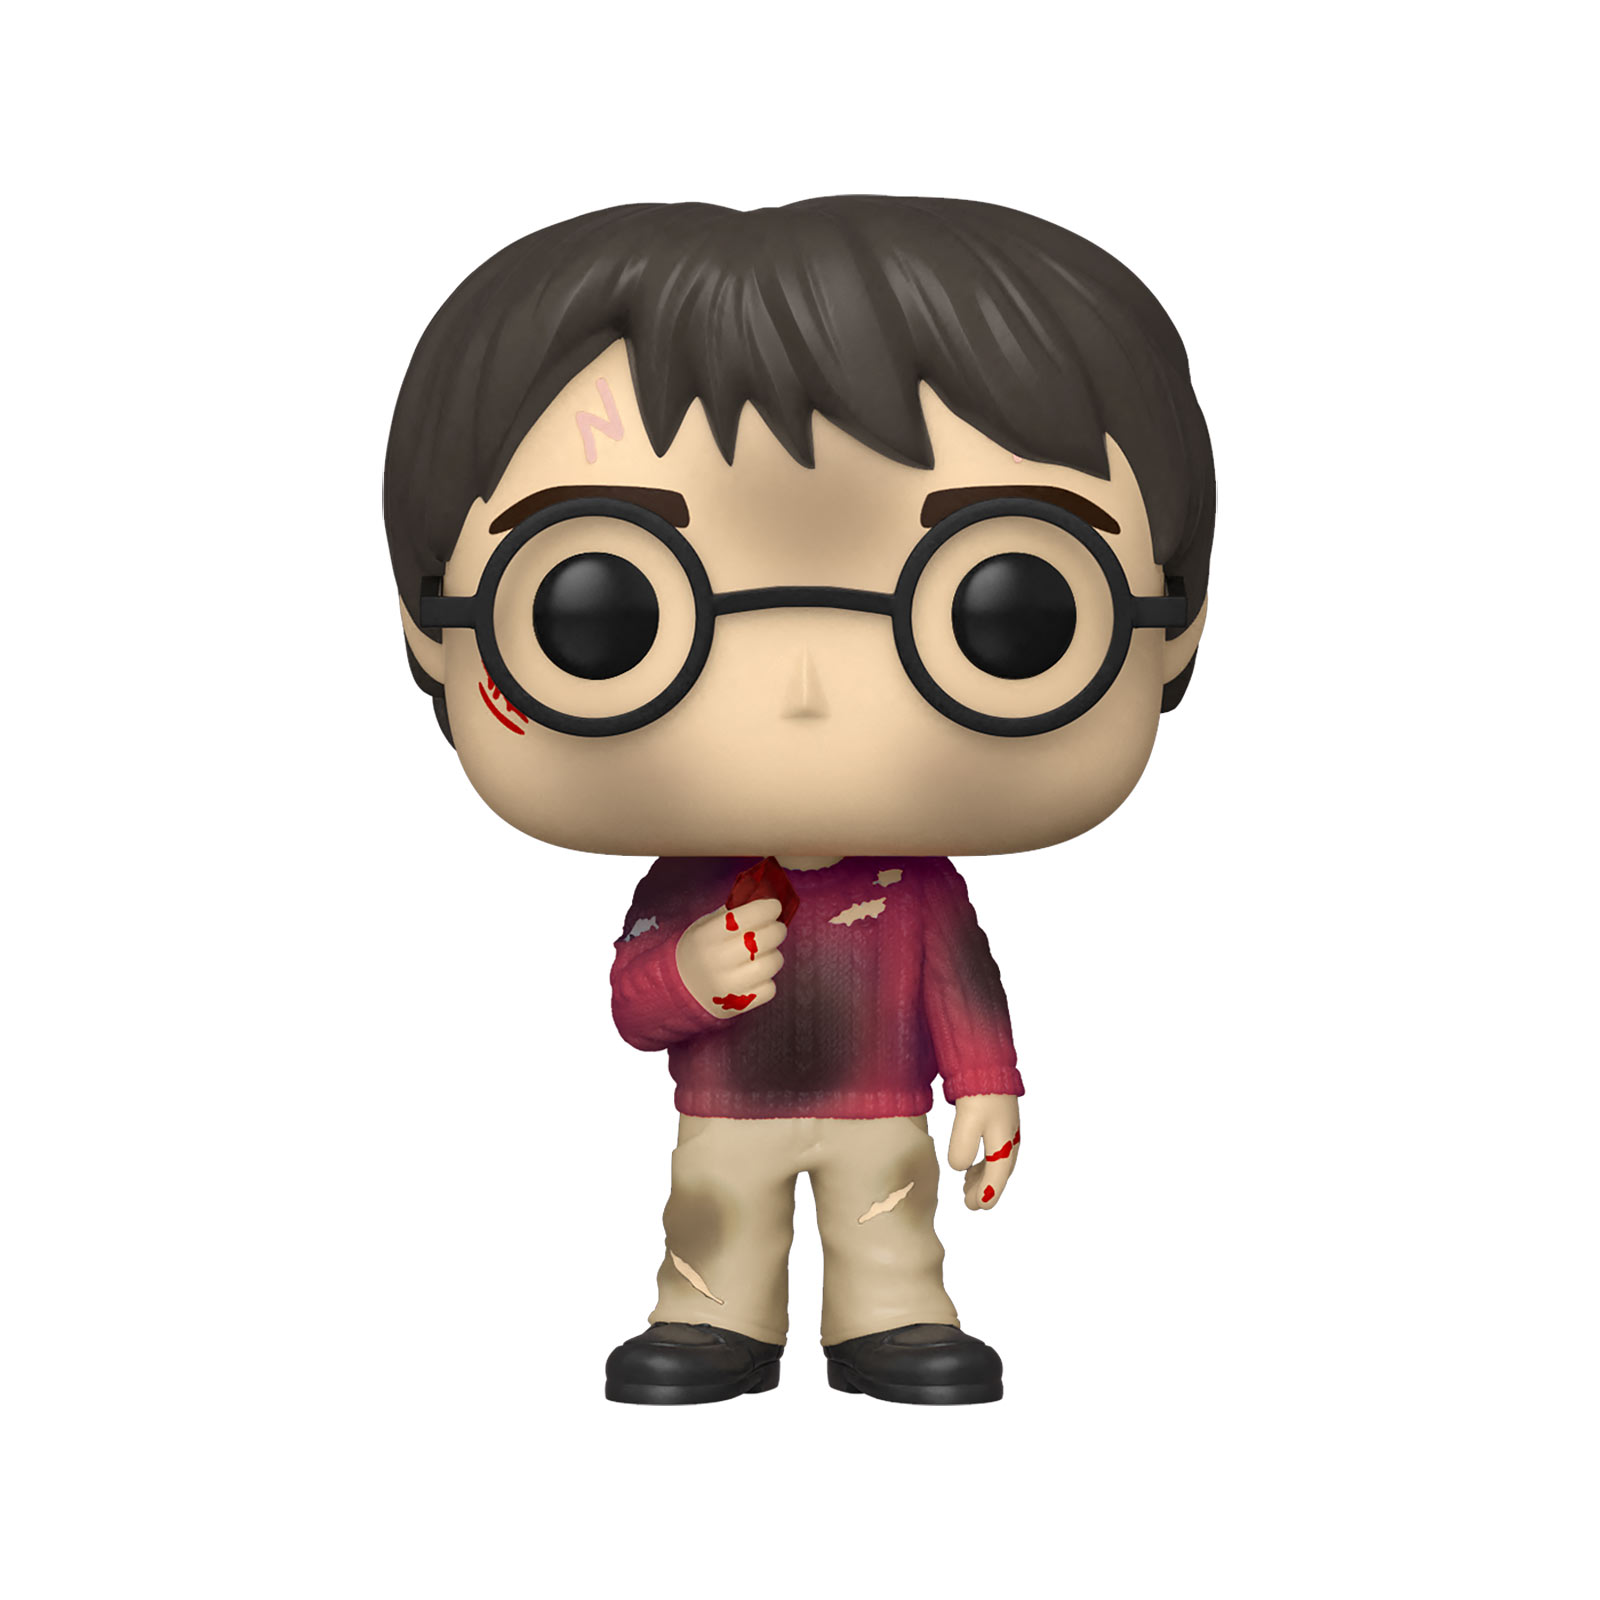 Harry Potter with Philosopher's Stone Funko Pop Figure